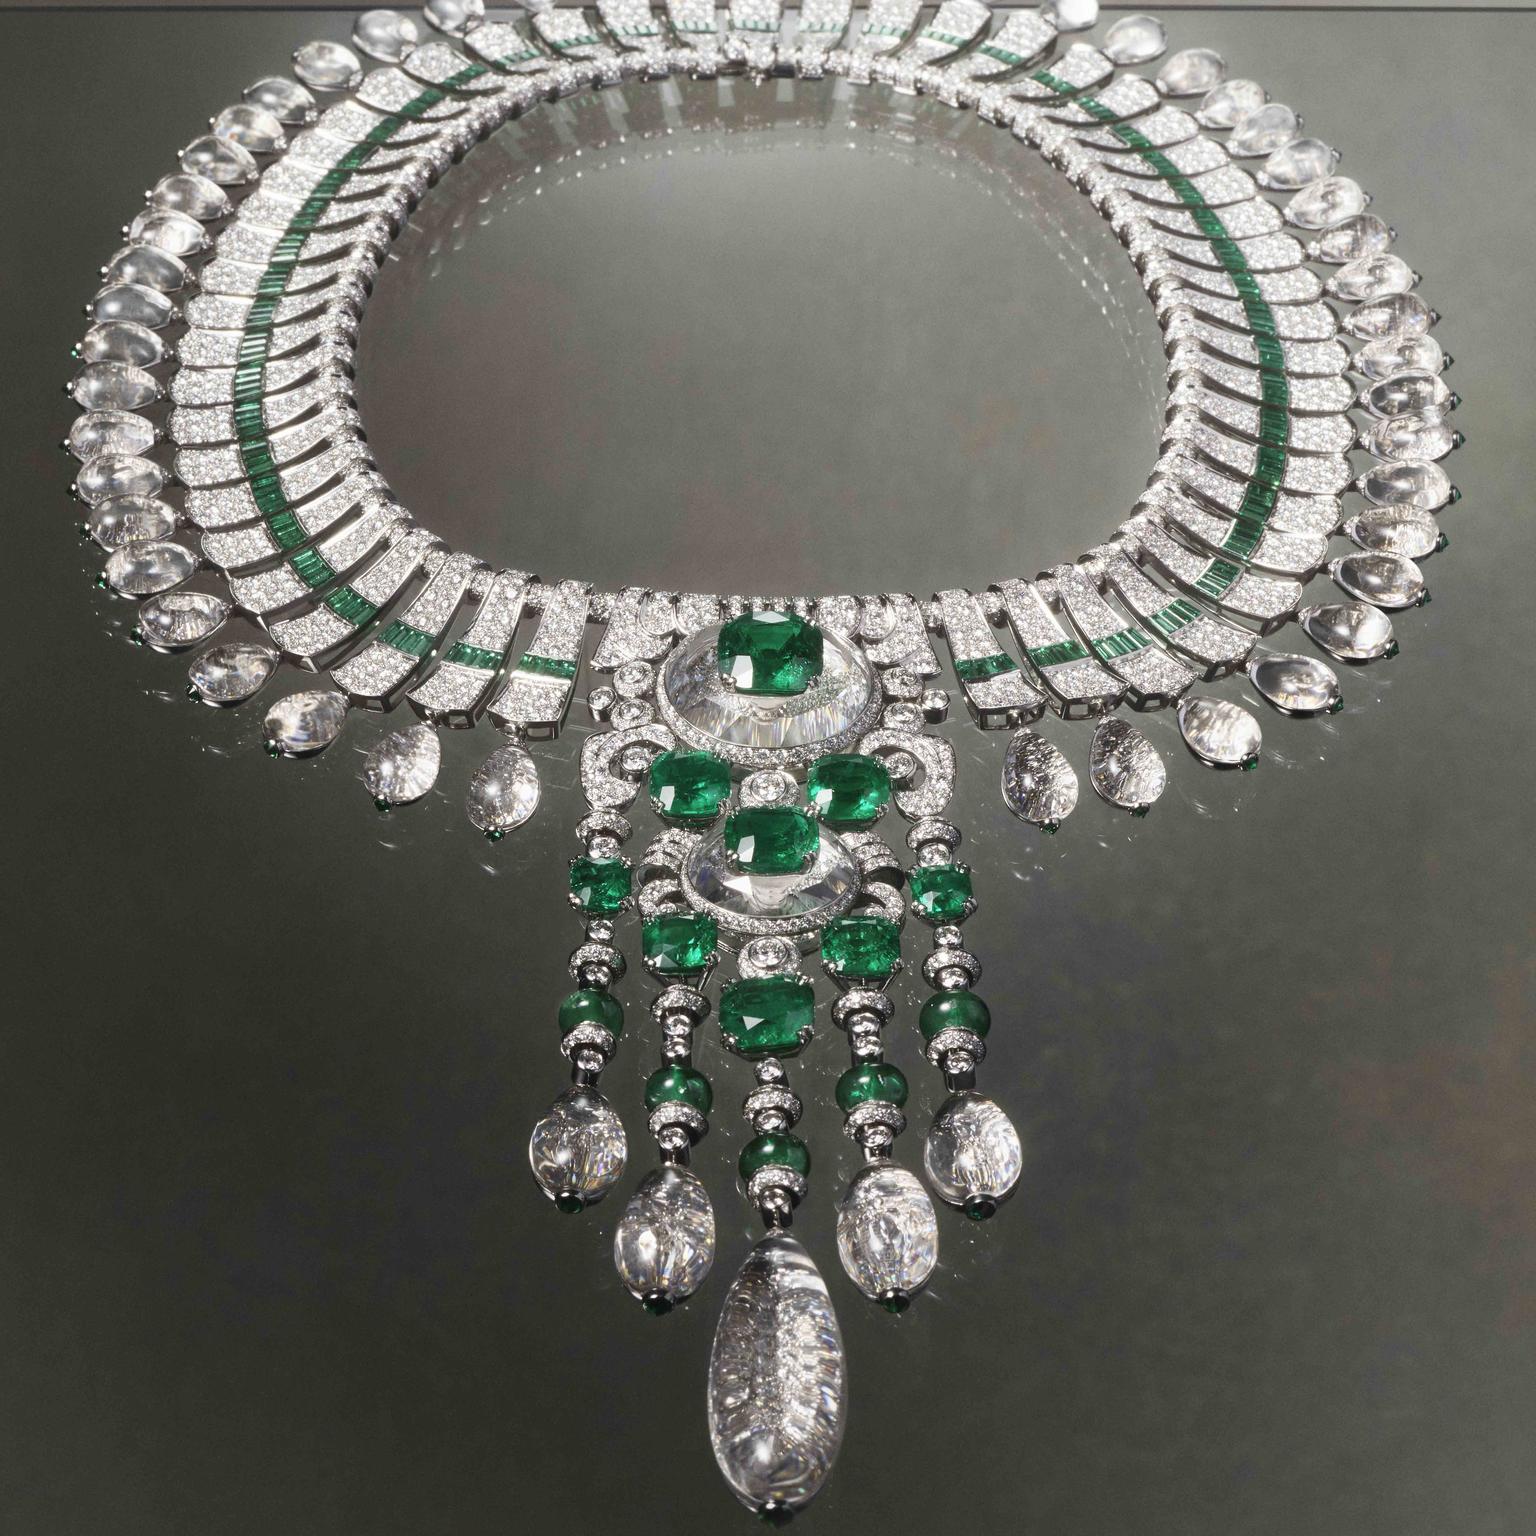 New Maharajah necklace by Boucheron